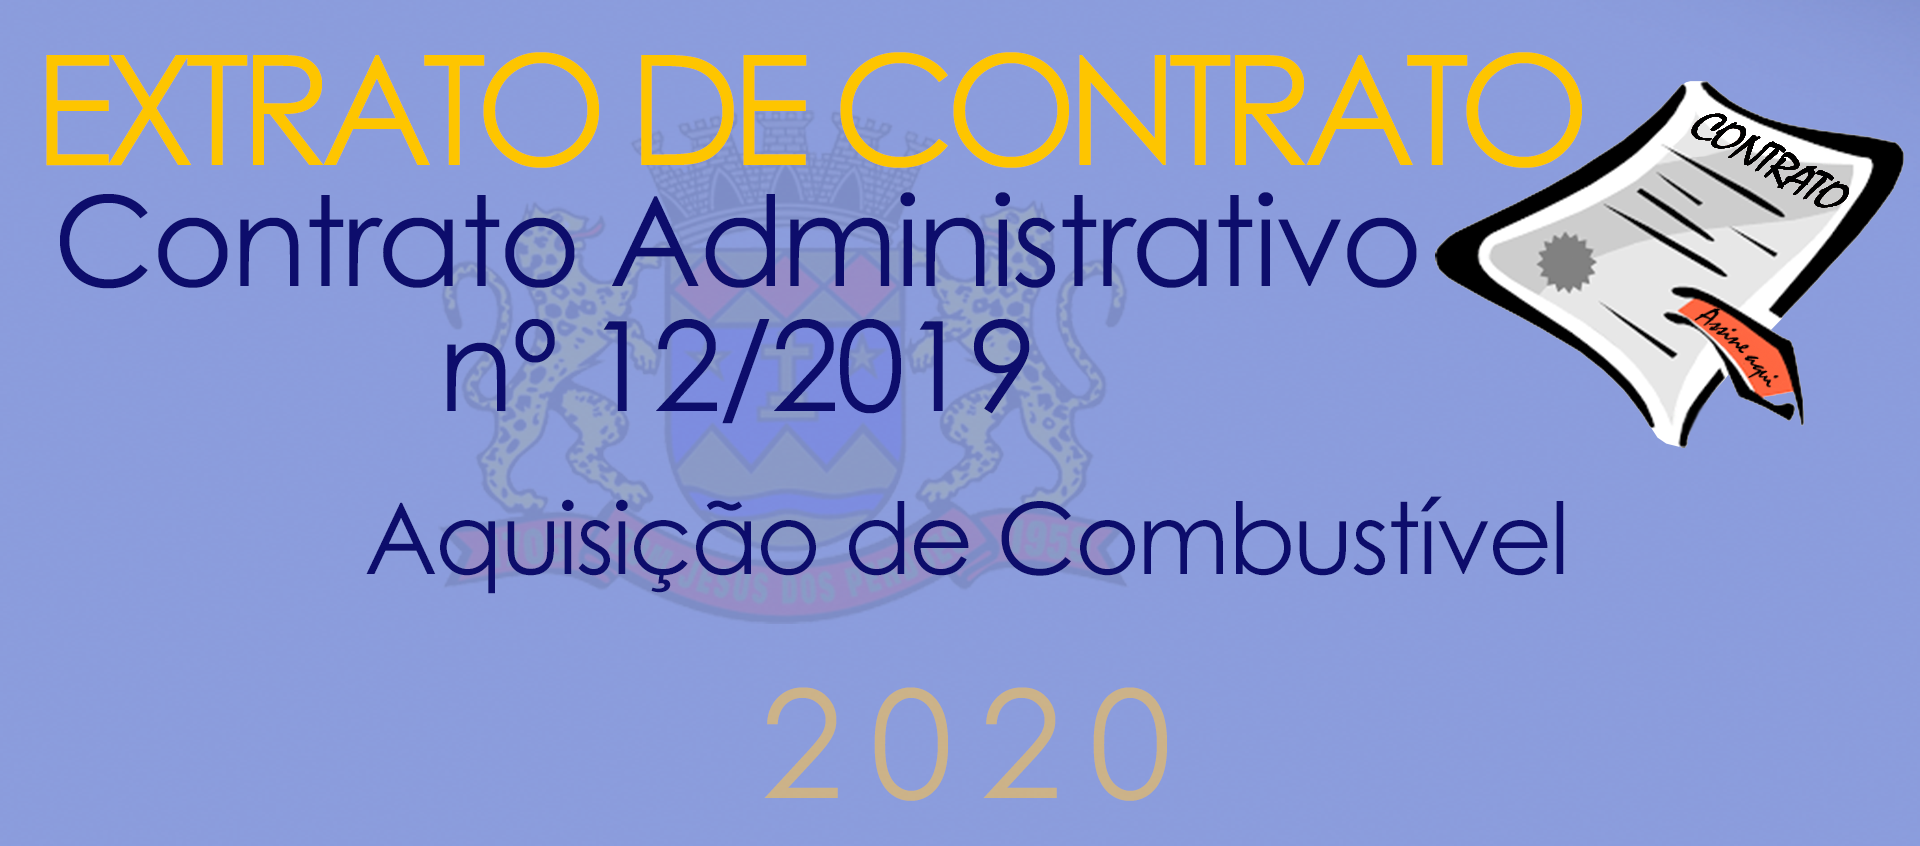 Extrato de Contrato Administrativo nº 12/2020